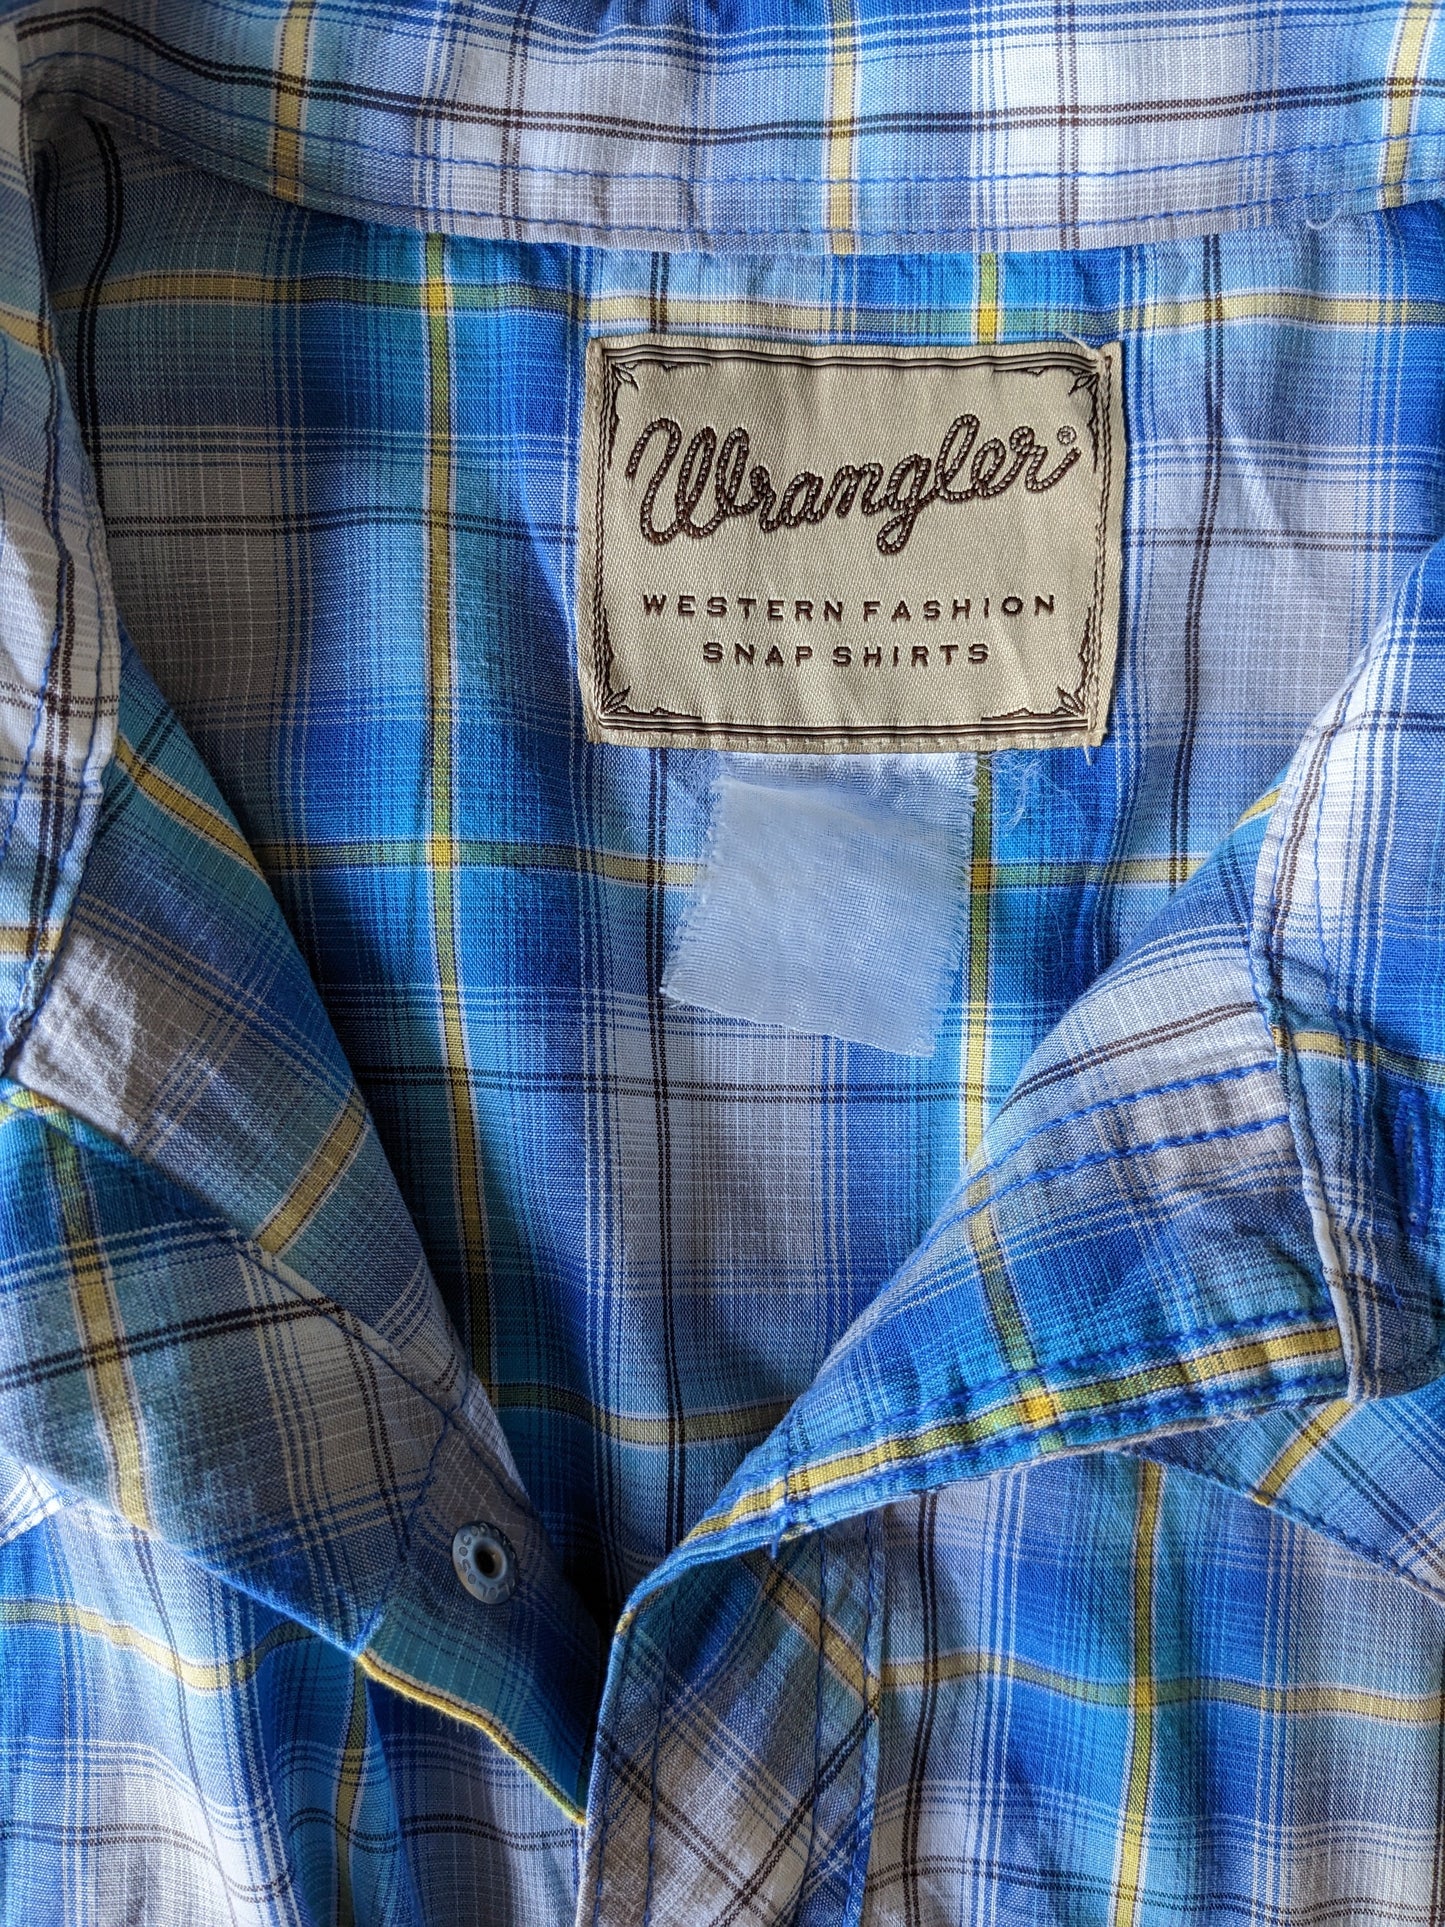 Wrangler Western Shirt Short Maniche con prigionieri di stampa. White a scacchi bianco blu. Dimensione XXL / 2XL.